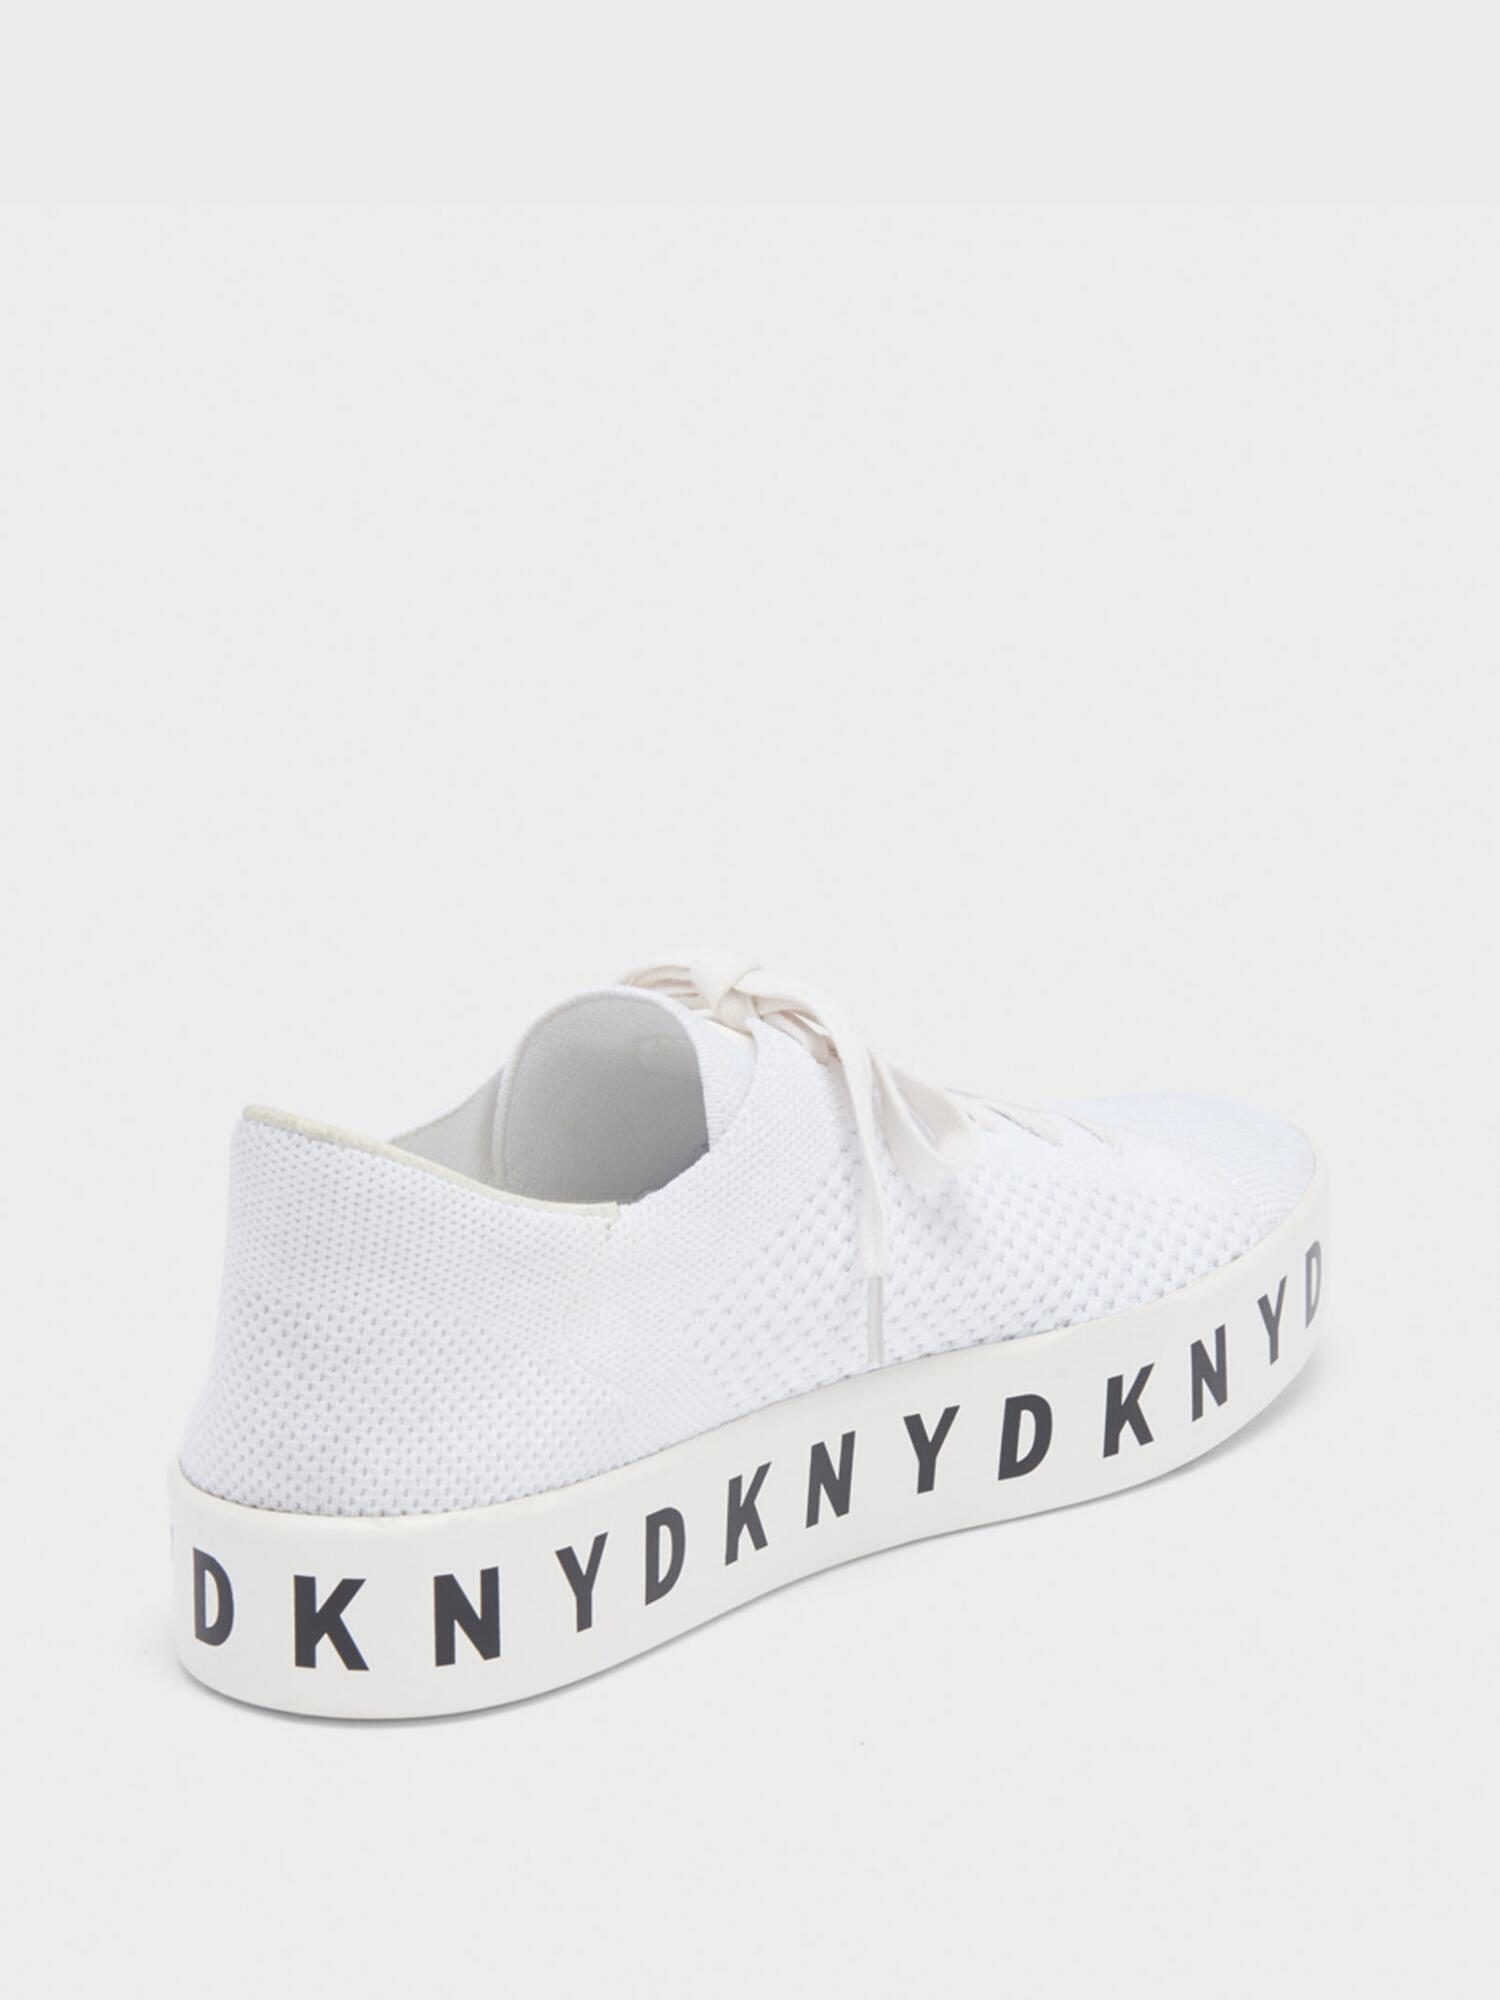 DKNY Banson Platform Sneaker in White 